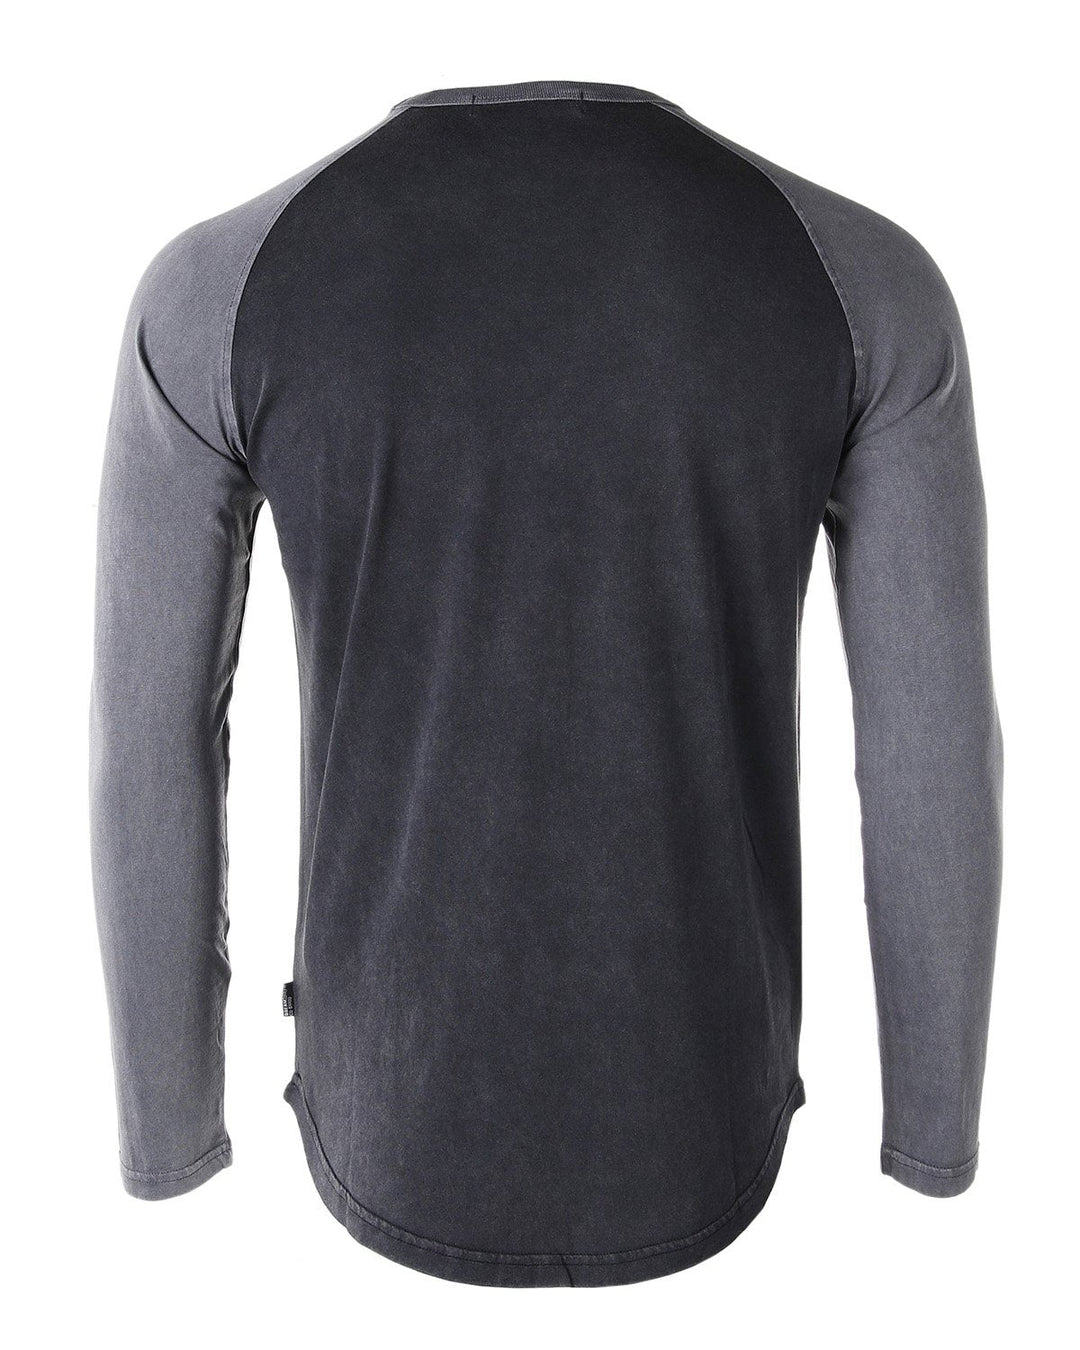 ZIMEGO Mens Athletic Fit Baseball Retro Contrast Long Sleeve Raglan T-Shirt-2